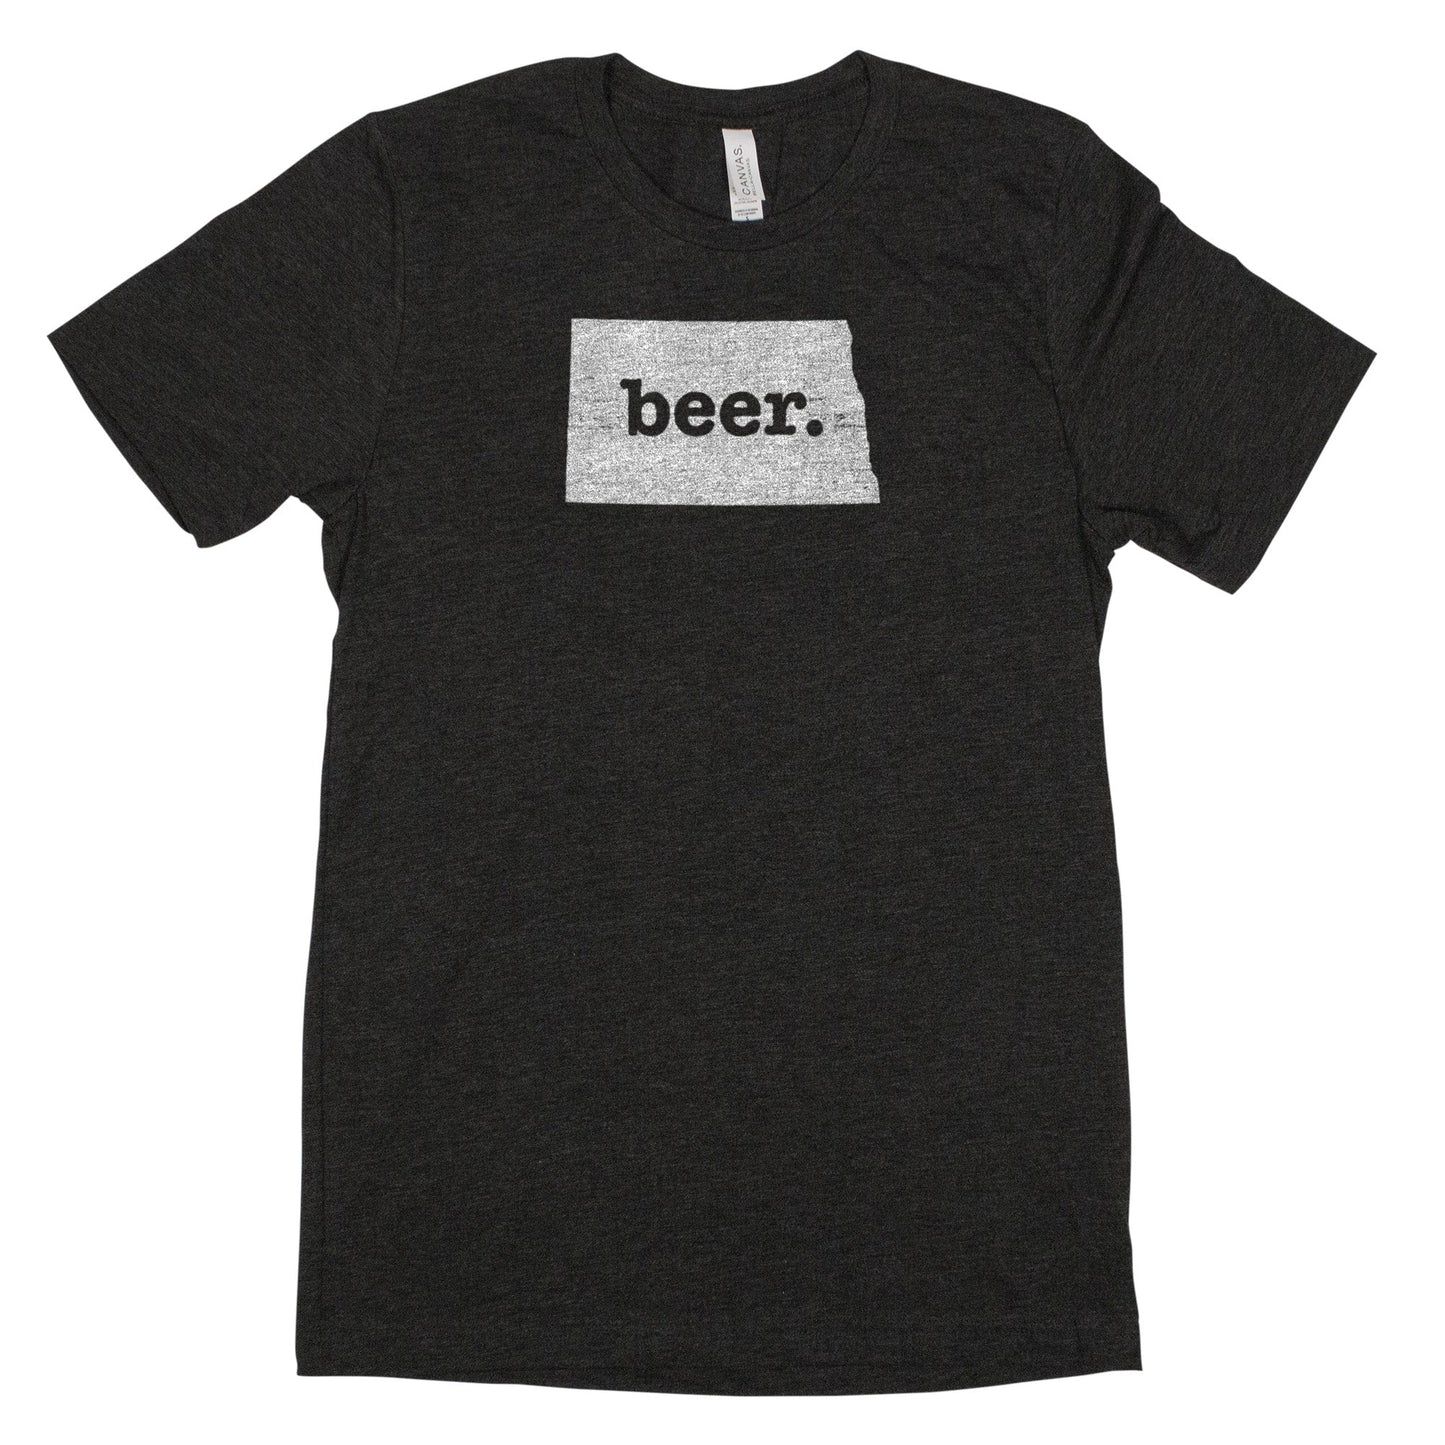 beer. Men's Unisex T-Shirt - North Dakota